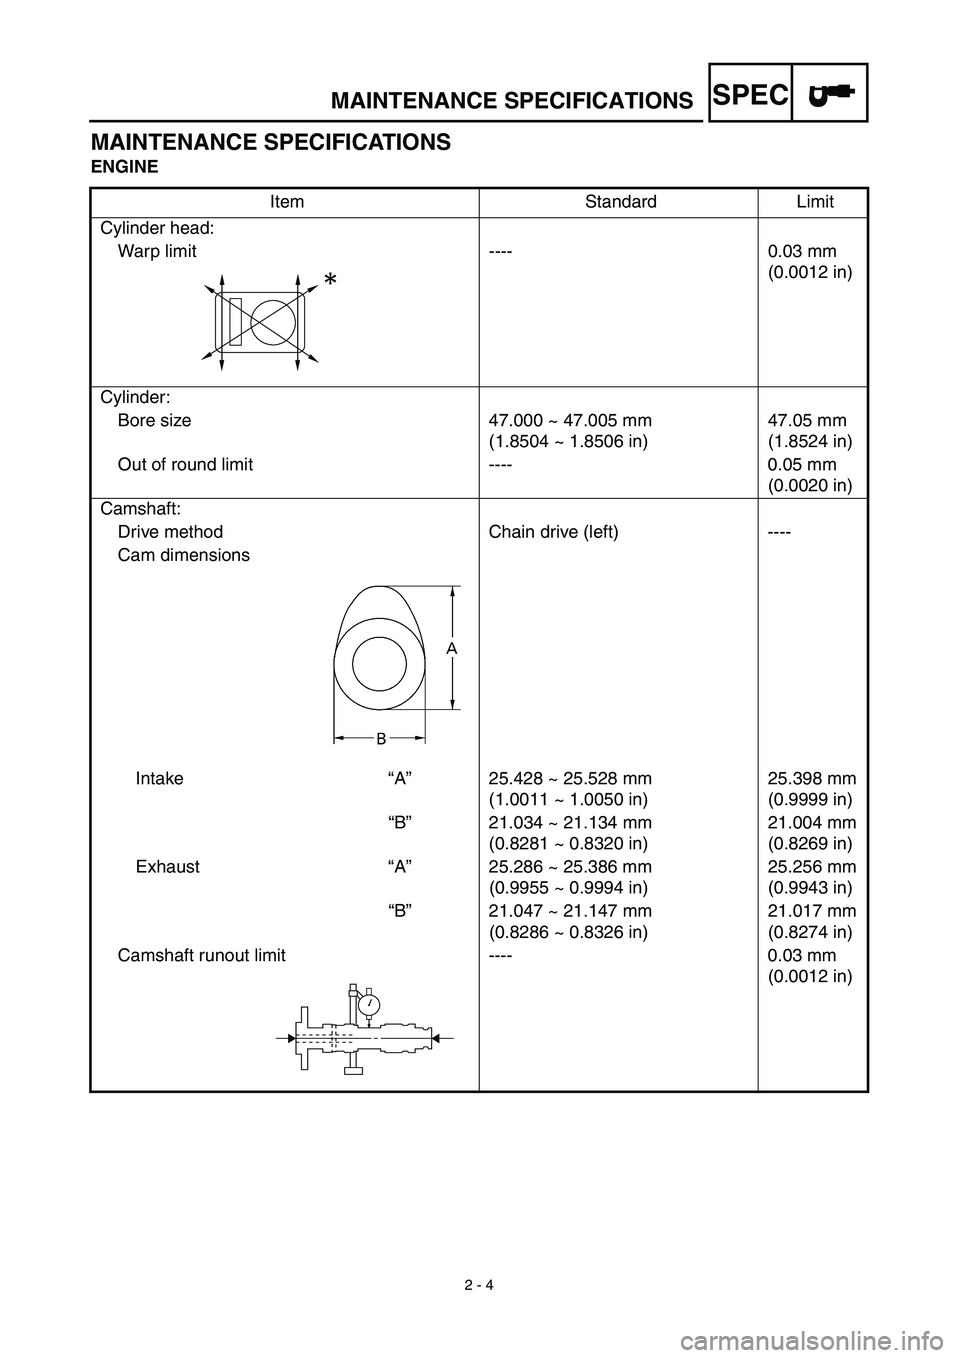 YAMAHA TTR90 2003  Betriebsanleitungen (in German) SPEC
2 - 4
MAINTENANCE SPECIFICATIONS
ENGINE
Item Standard Limit
Cylinder head:
Warp limit ---- 0.03 mm 
(0.0012 in)
Cylinder:
Bore size 47.000 ~ 47.005 mm
(1.8504 ~ 1.8506 in)47.05 mm
(1.8524 in)
Out